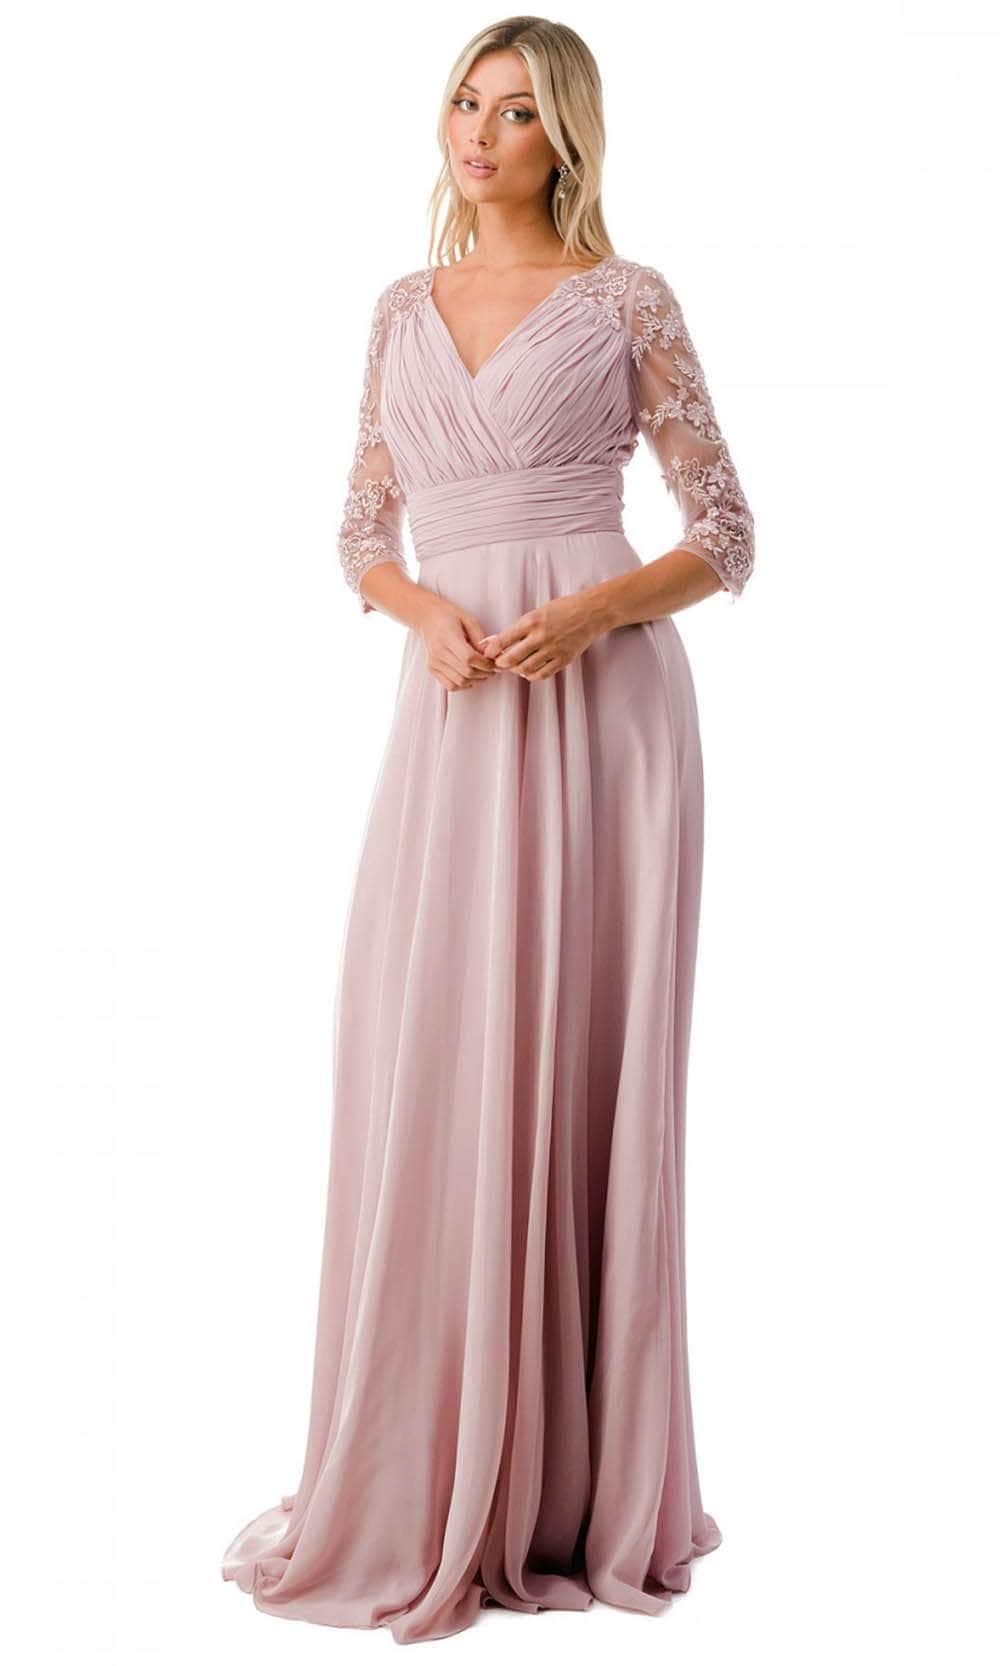 Aspeed Design M2733F - Quarter Sleeve Prom Dress